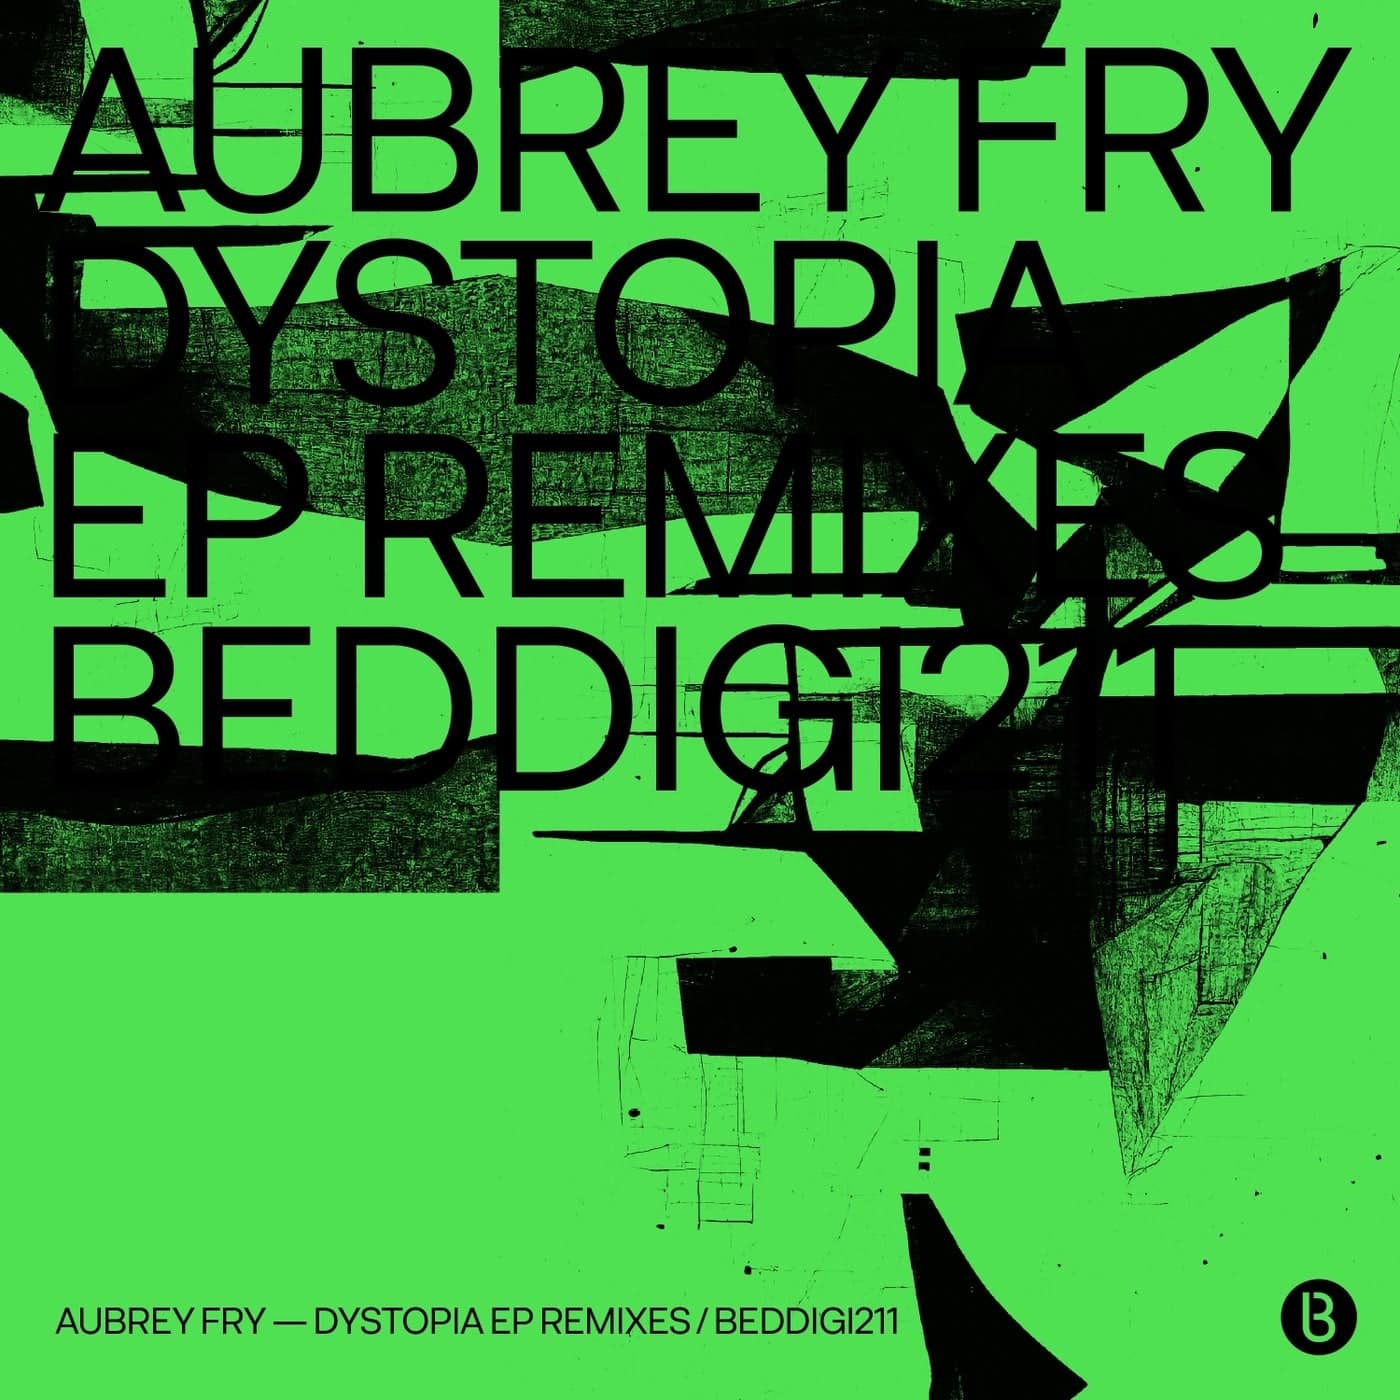 image cover: Aubrey Fry - Dystopia Remixes / BEDDIGI211